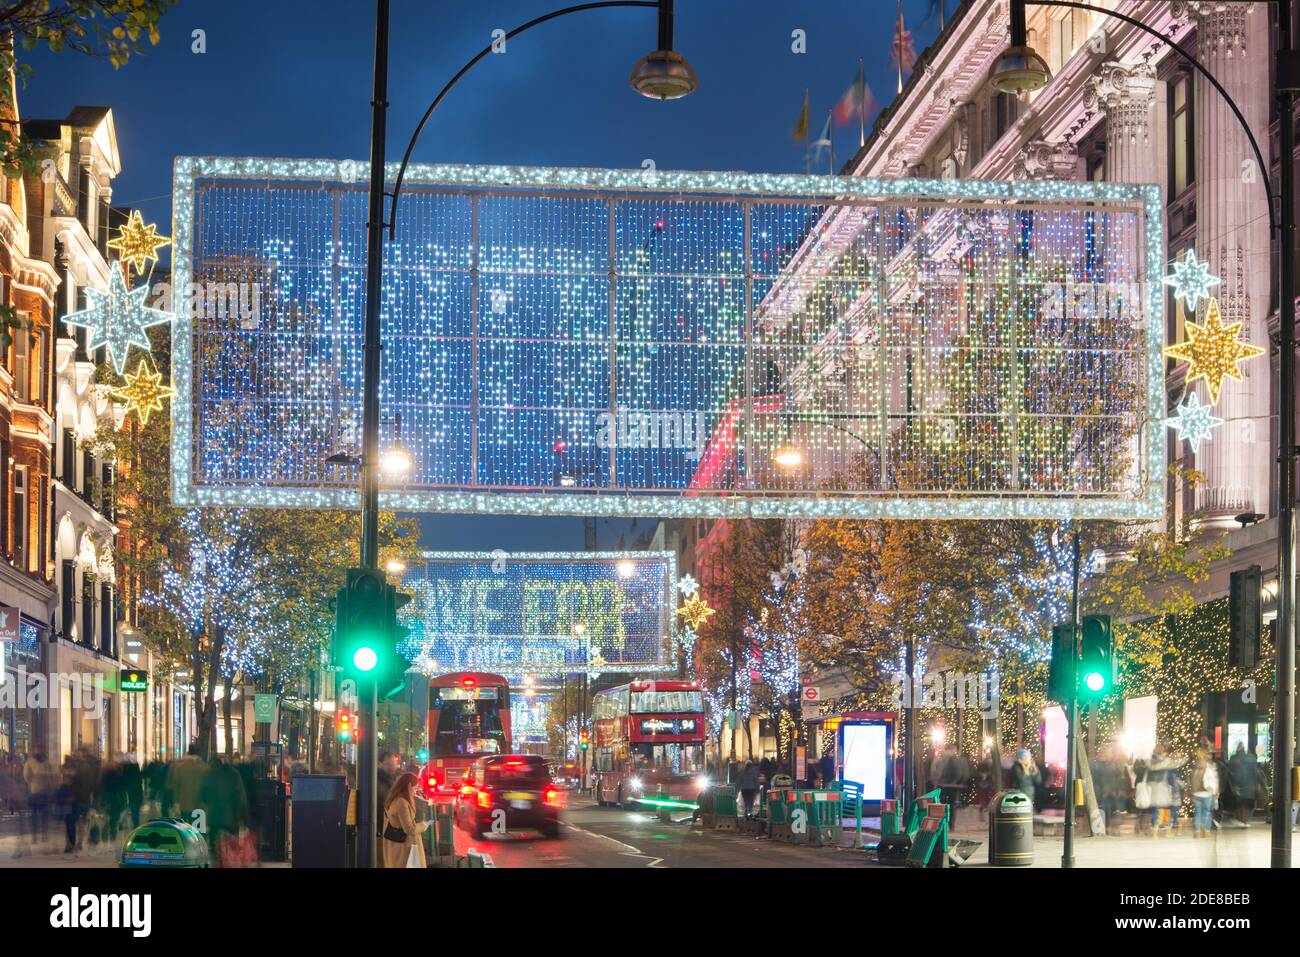 Light Curtains LED Festive Season Art Public Display With Love Xmas Christmas Lights 2020 Oxford Street, West End, Westminster, London W1D Stock Photo